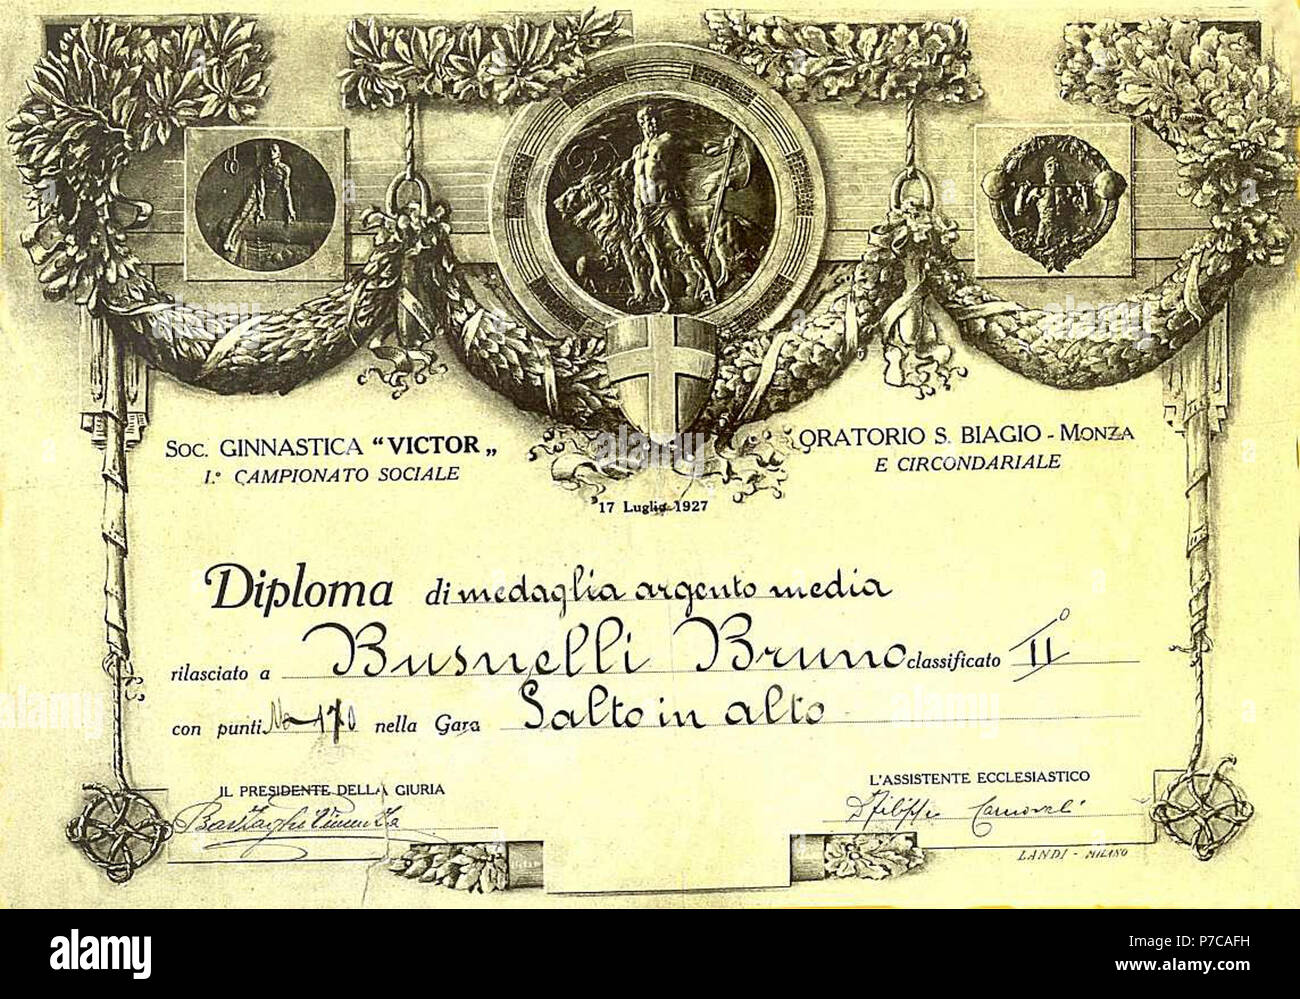 1927 - Bruno-Busnelli - Diplom - Salto-in-alto - ginnastica - Victor. Stockfoto